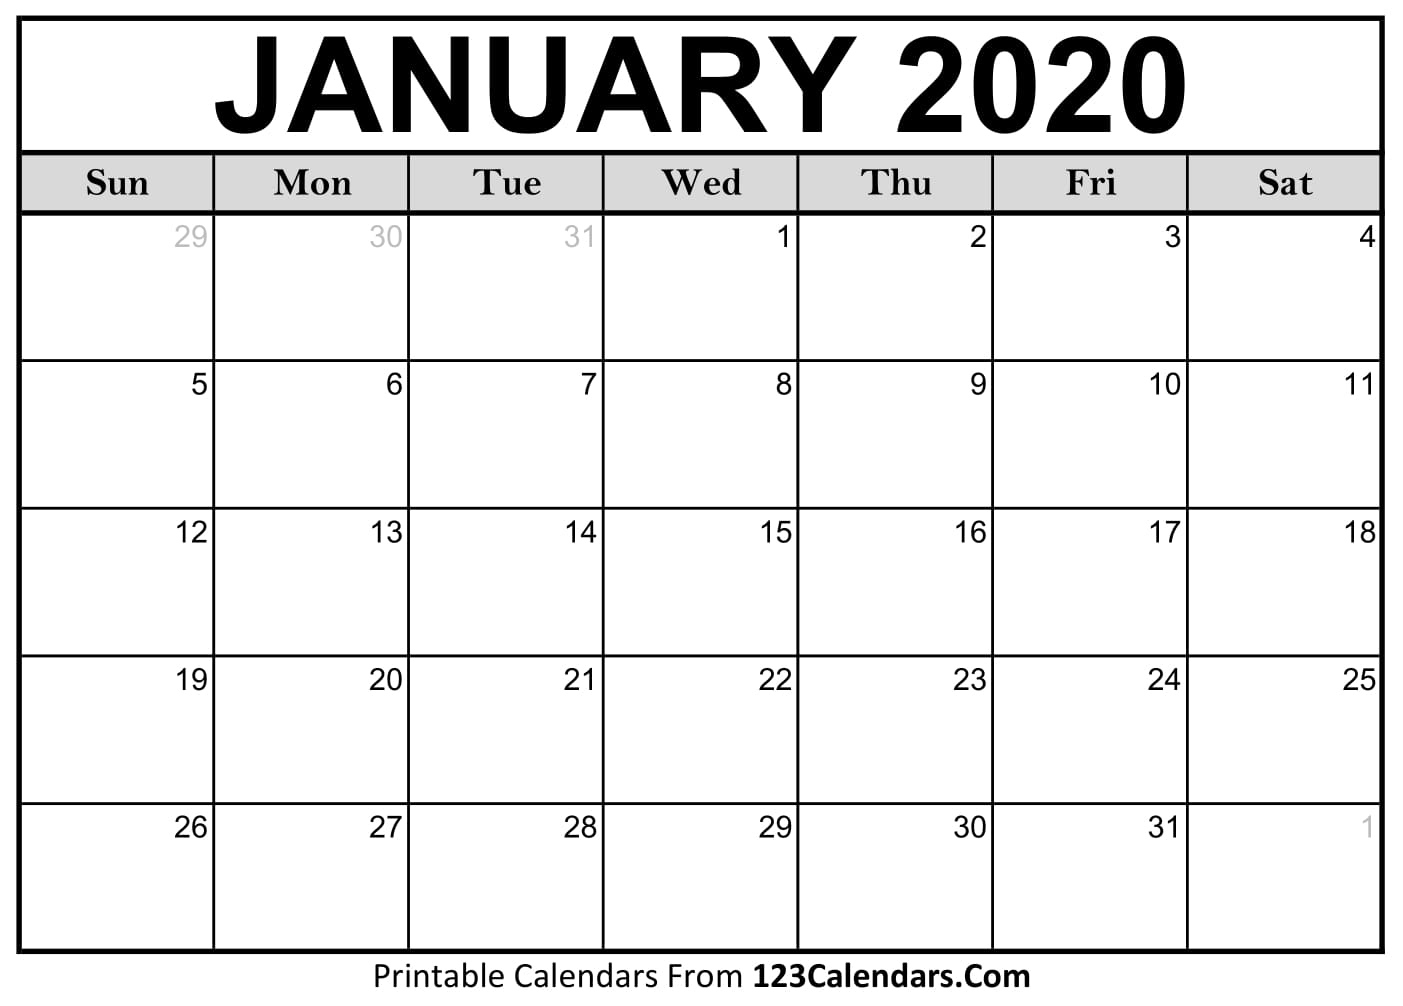 Free Printable Calendar | 123Calendars Printable Calendar For 2020